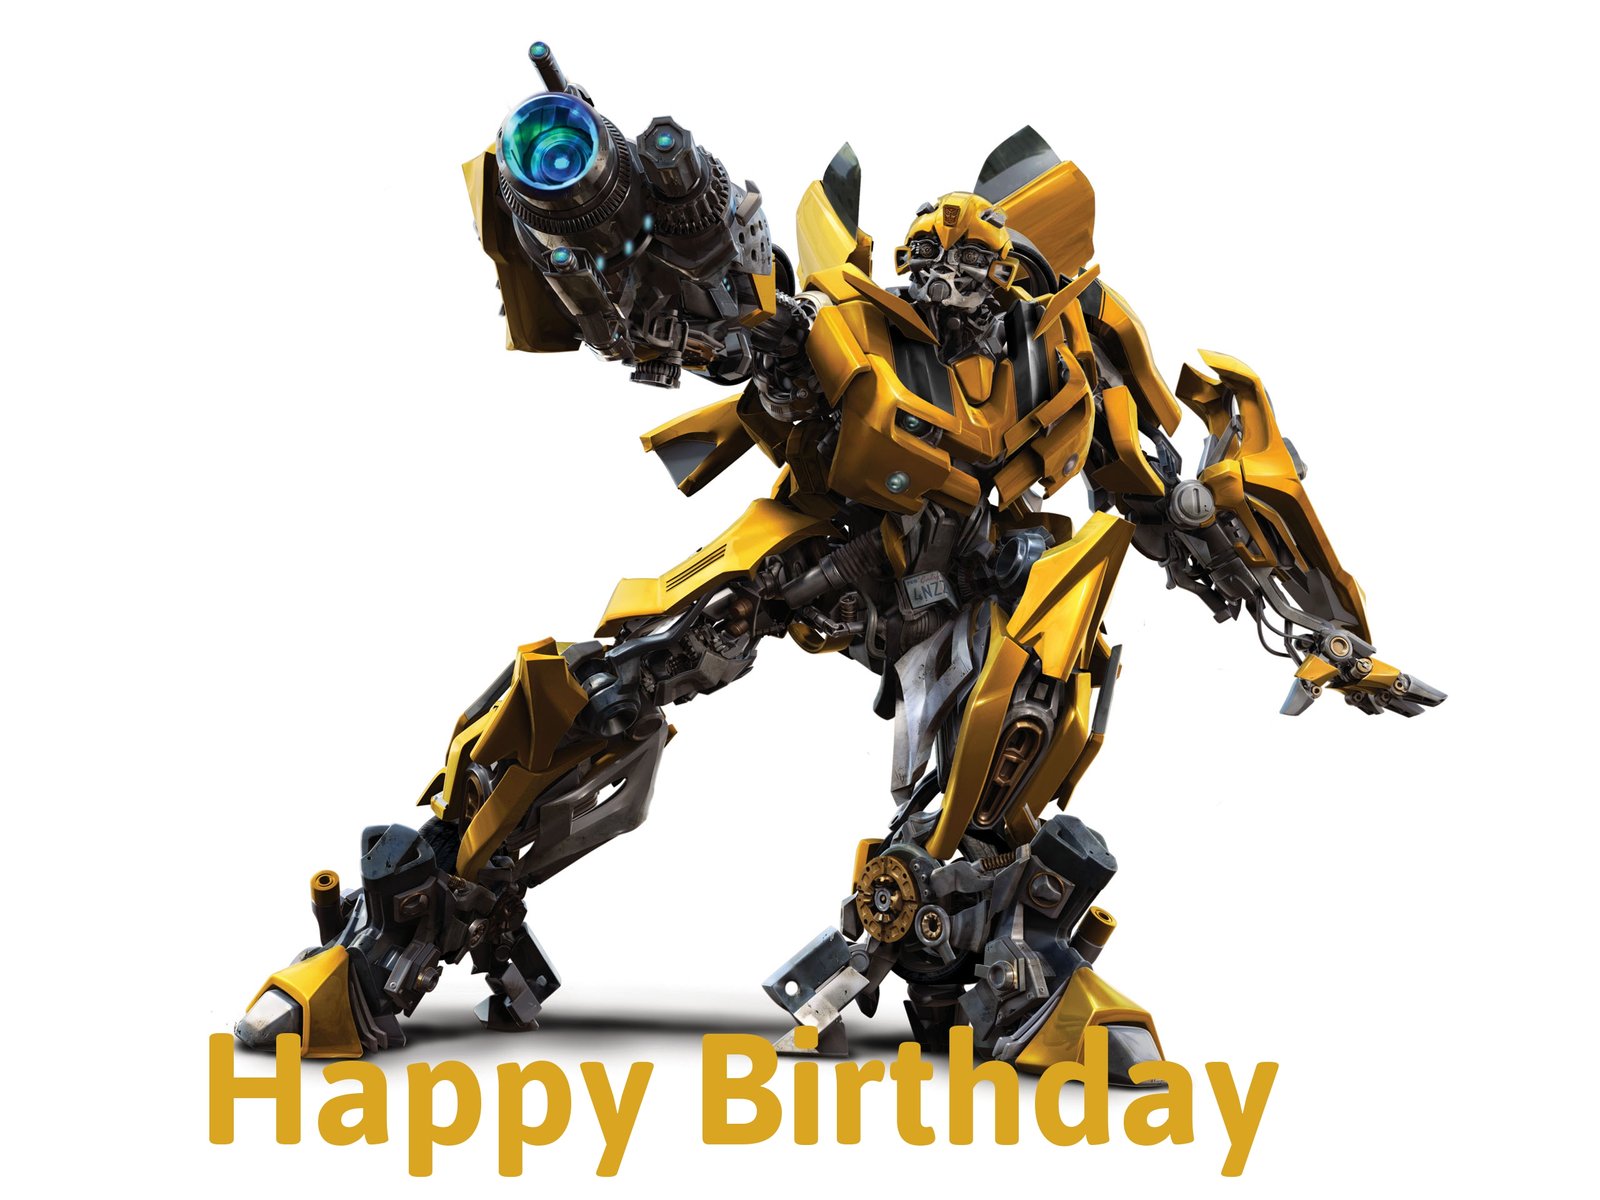 Transformers birthday cards